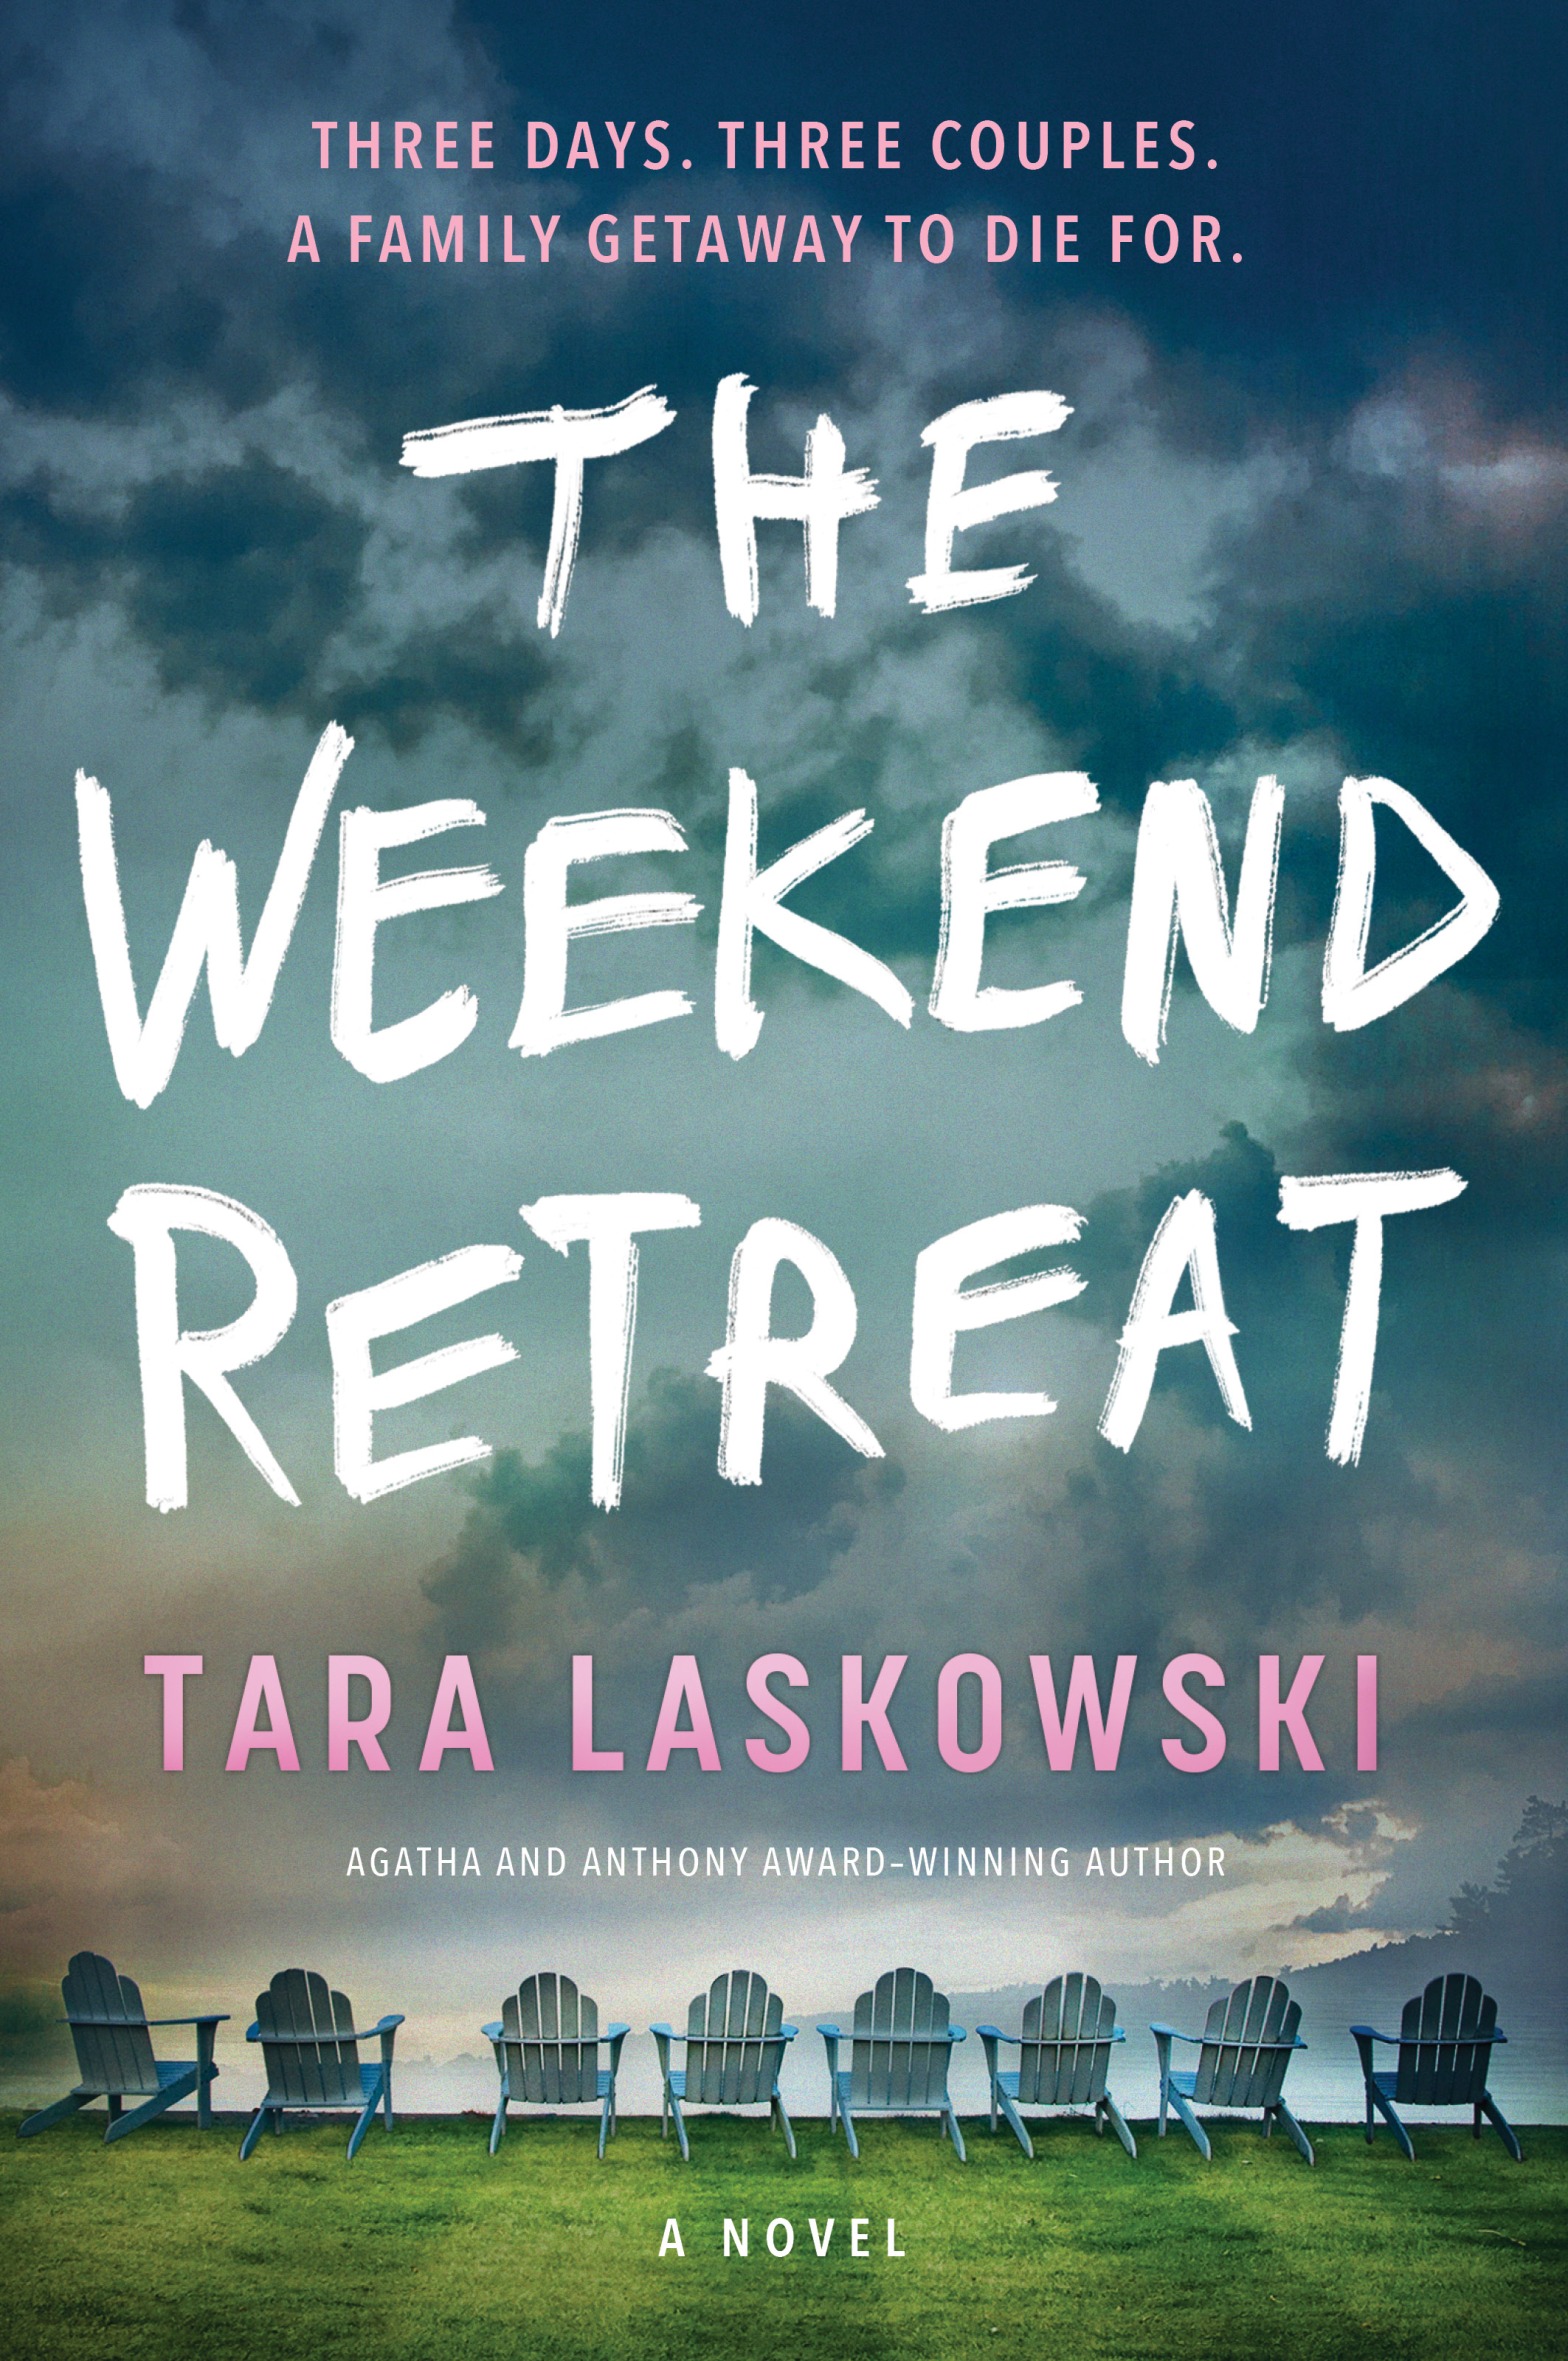 THE WEEKEND RETREAT by Tara Laskowski blog tour and book excerpt!